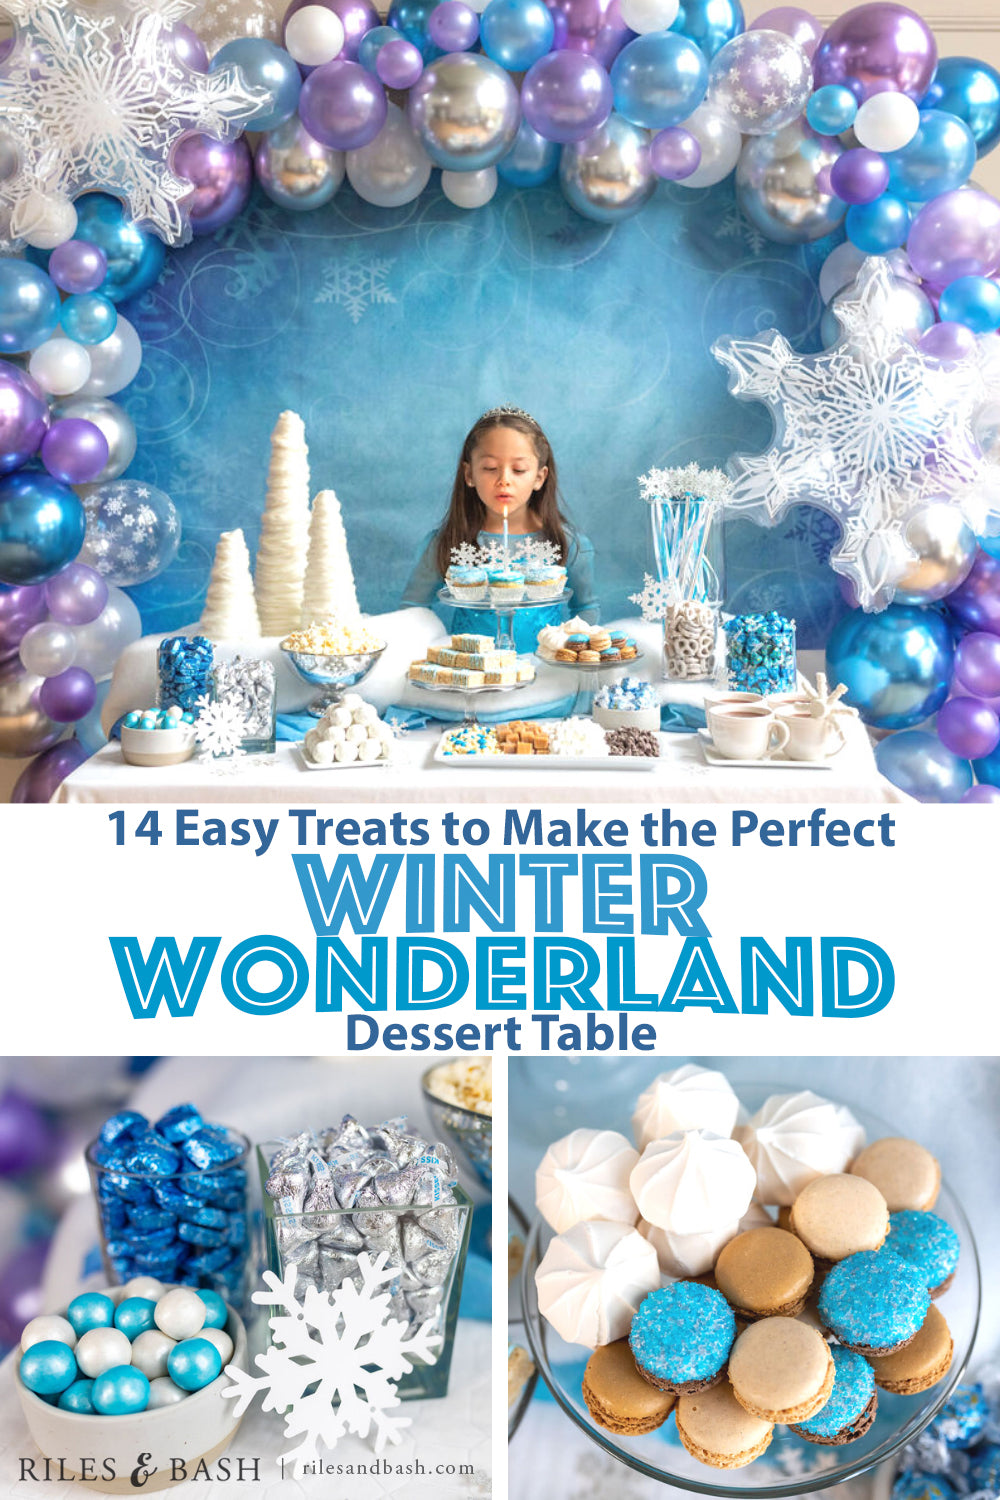 Riles & Bash_14 Easy Treats to Make the Perfect Winter Wonderland Dessert Table